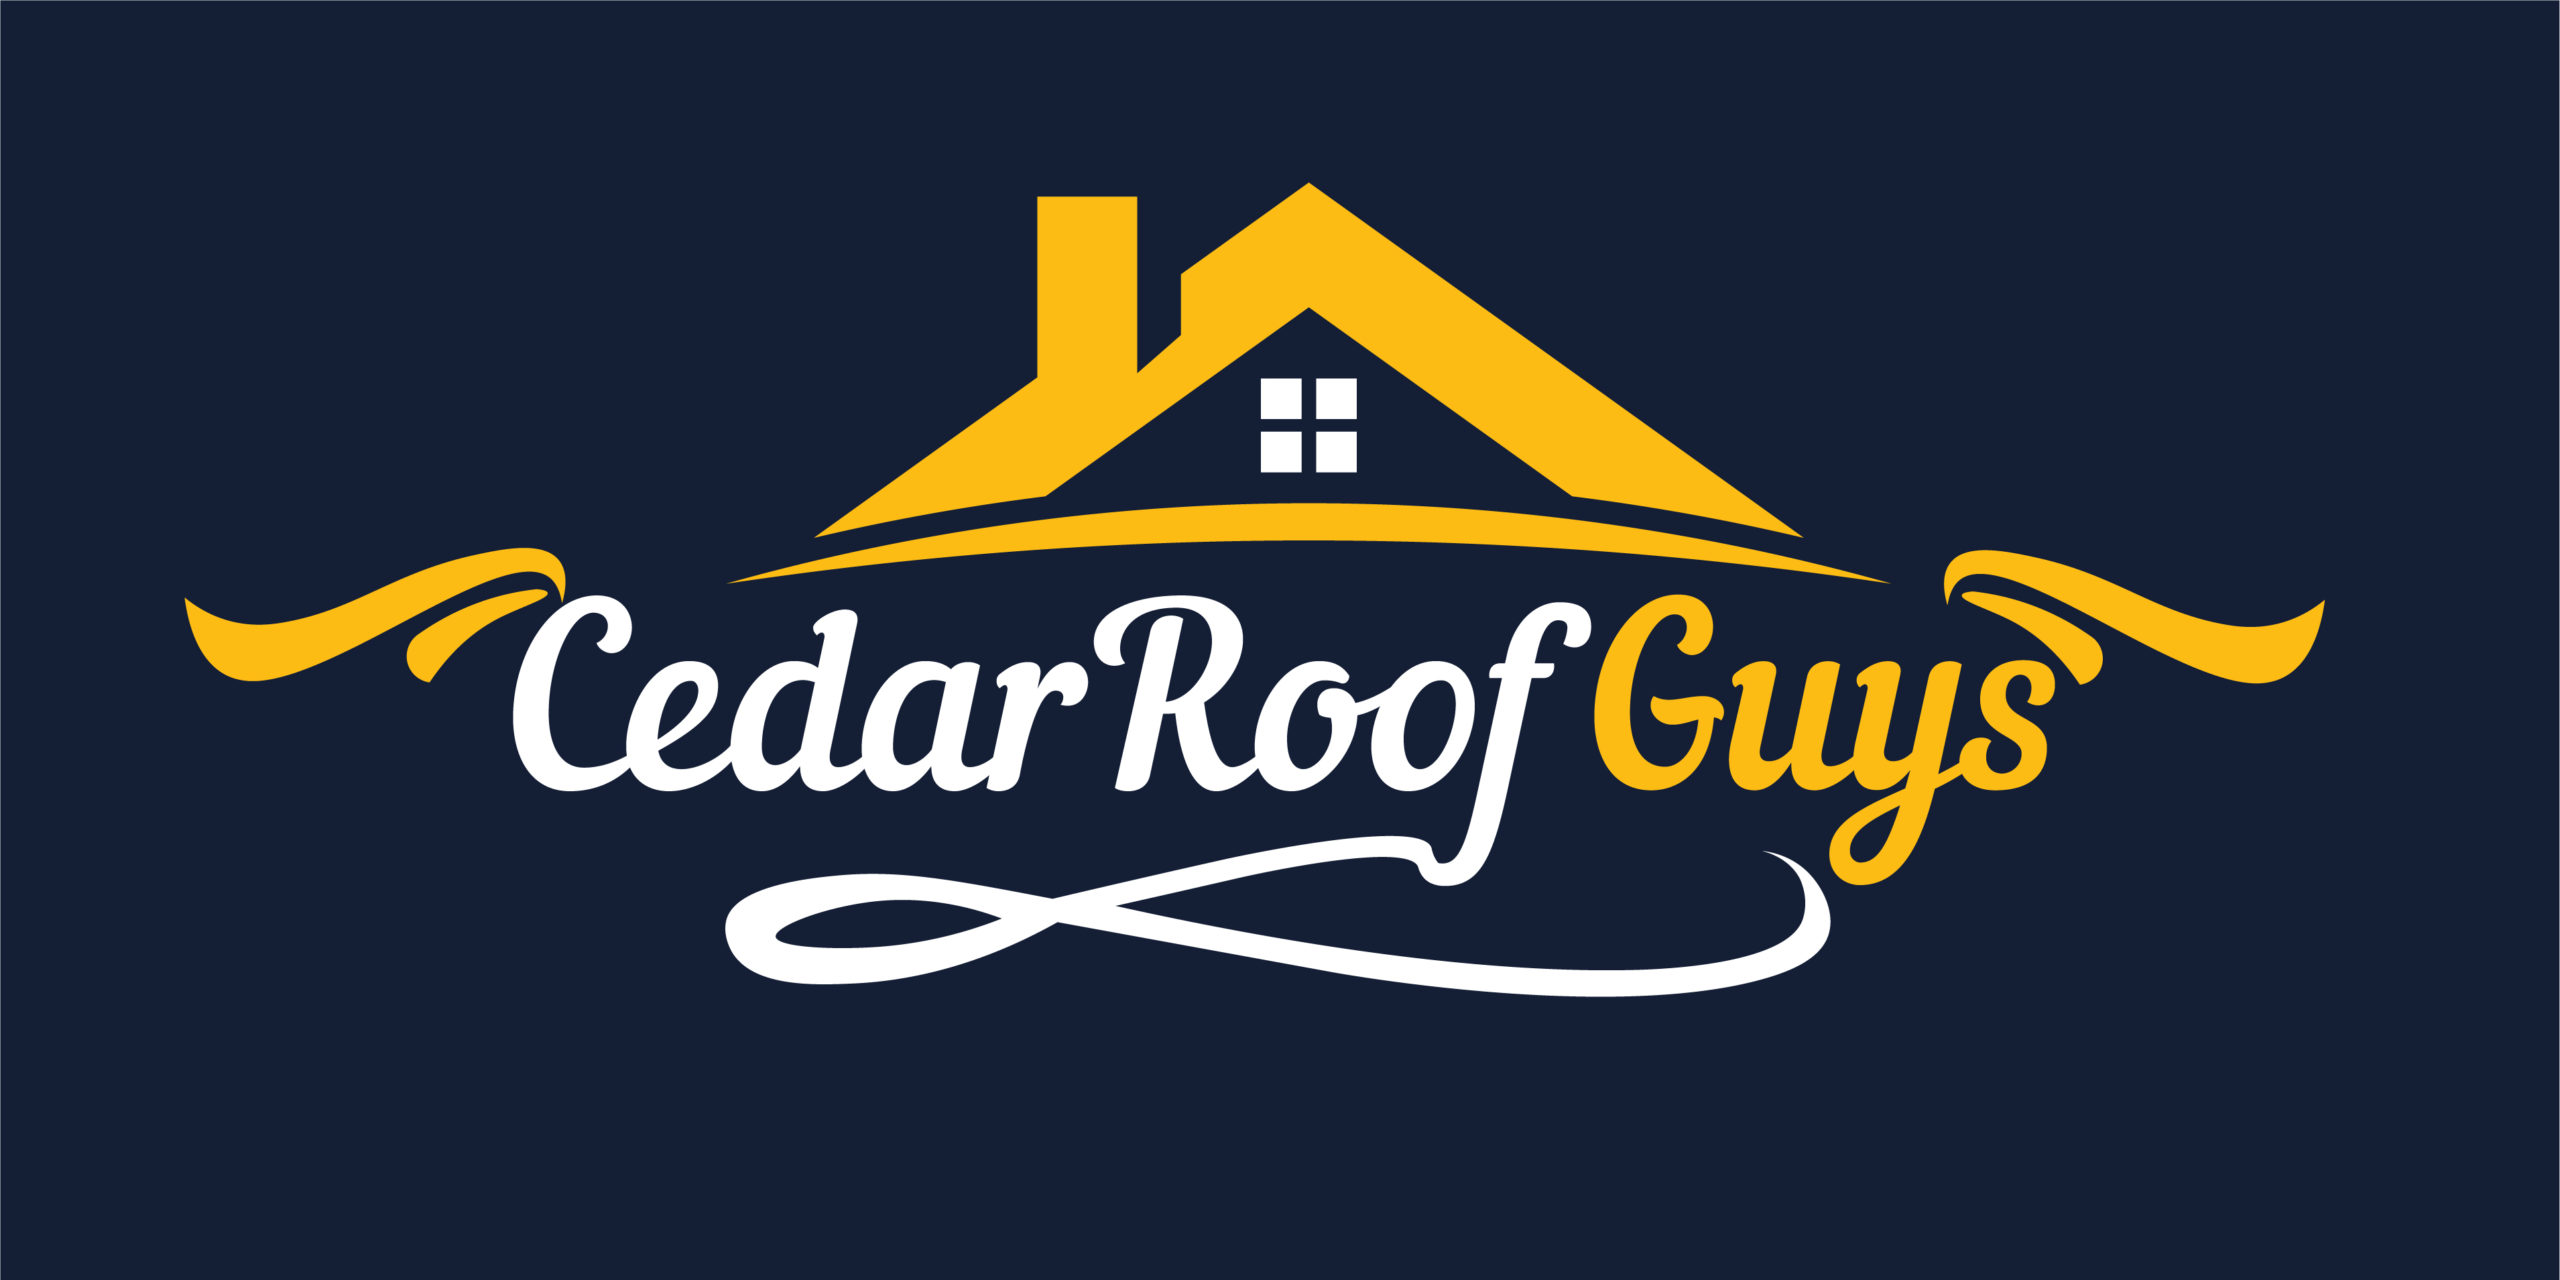 Cedar Roof Guys